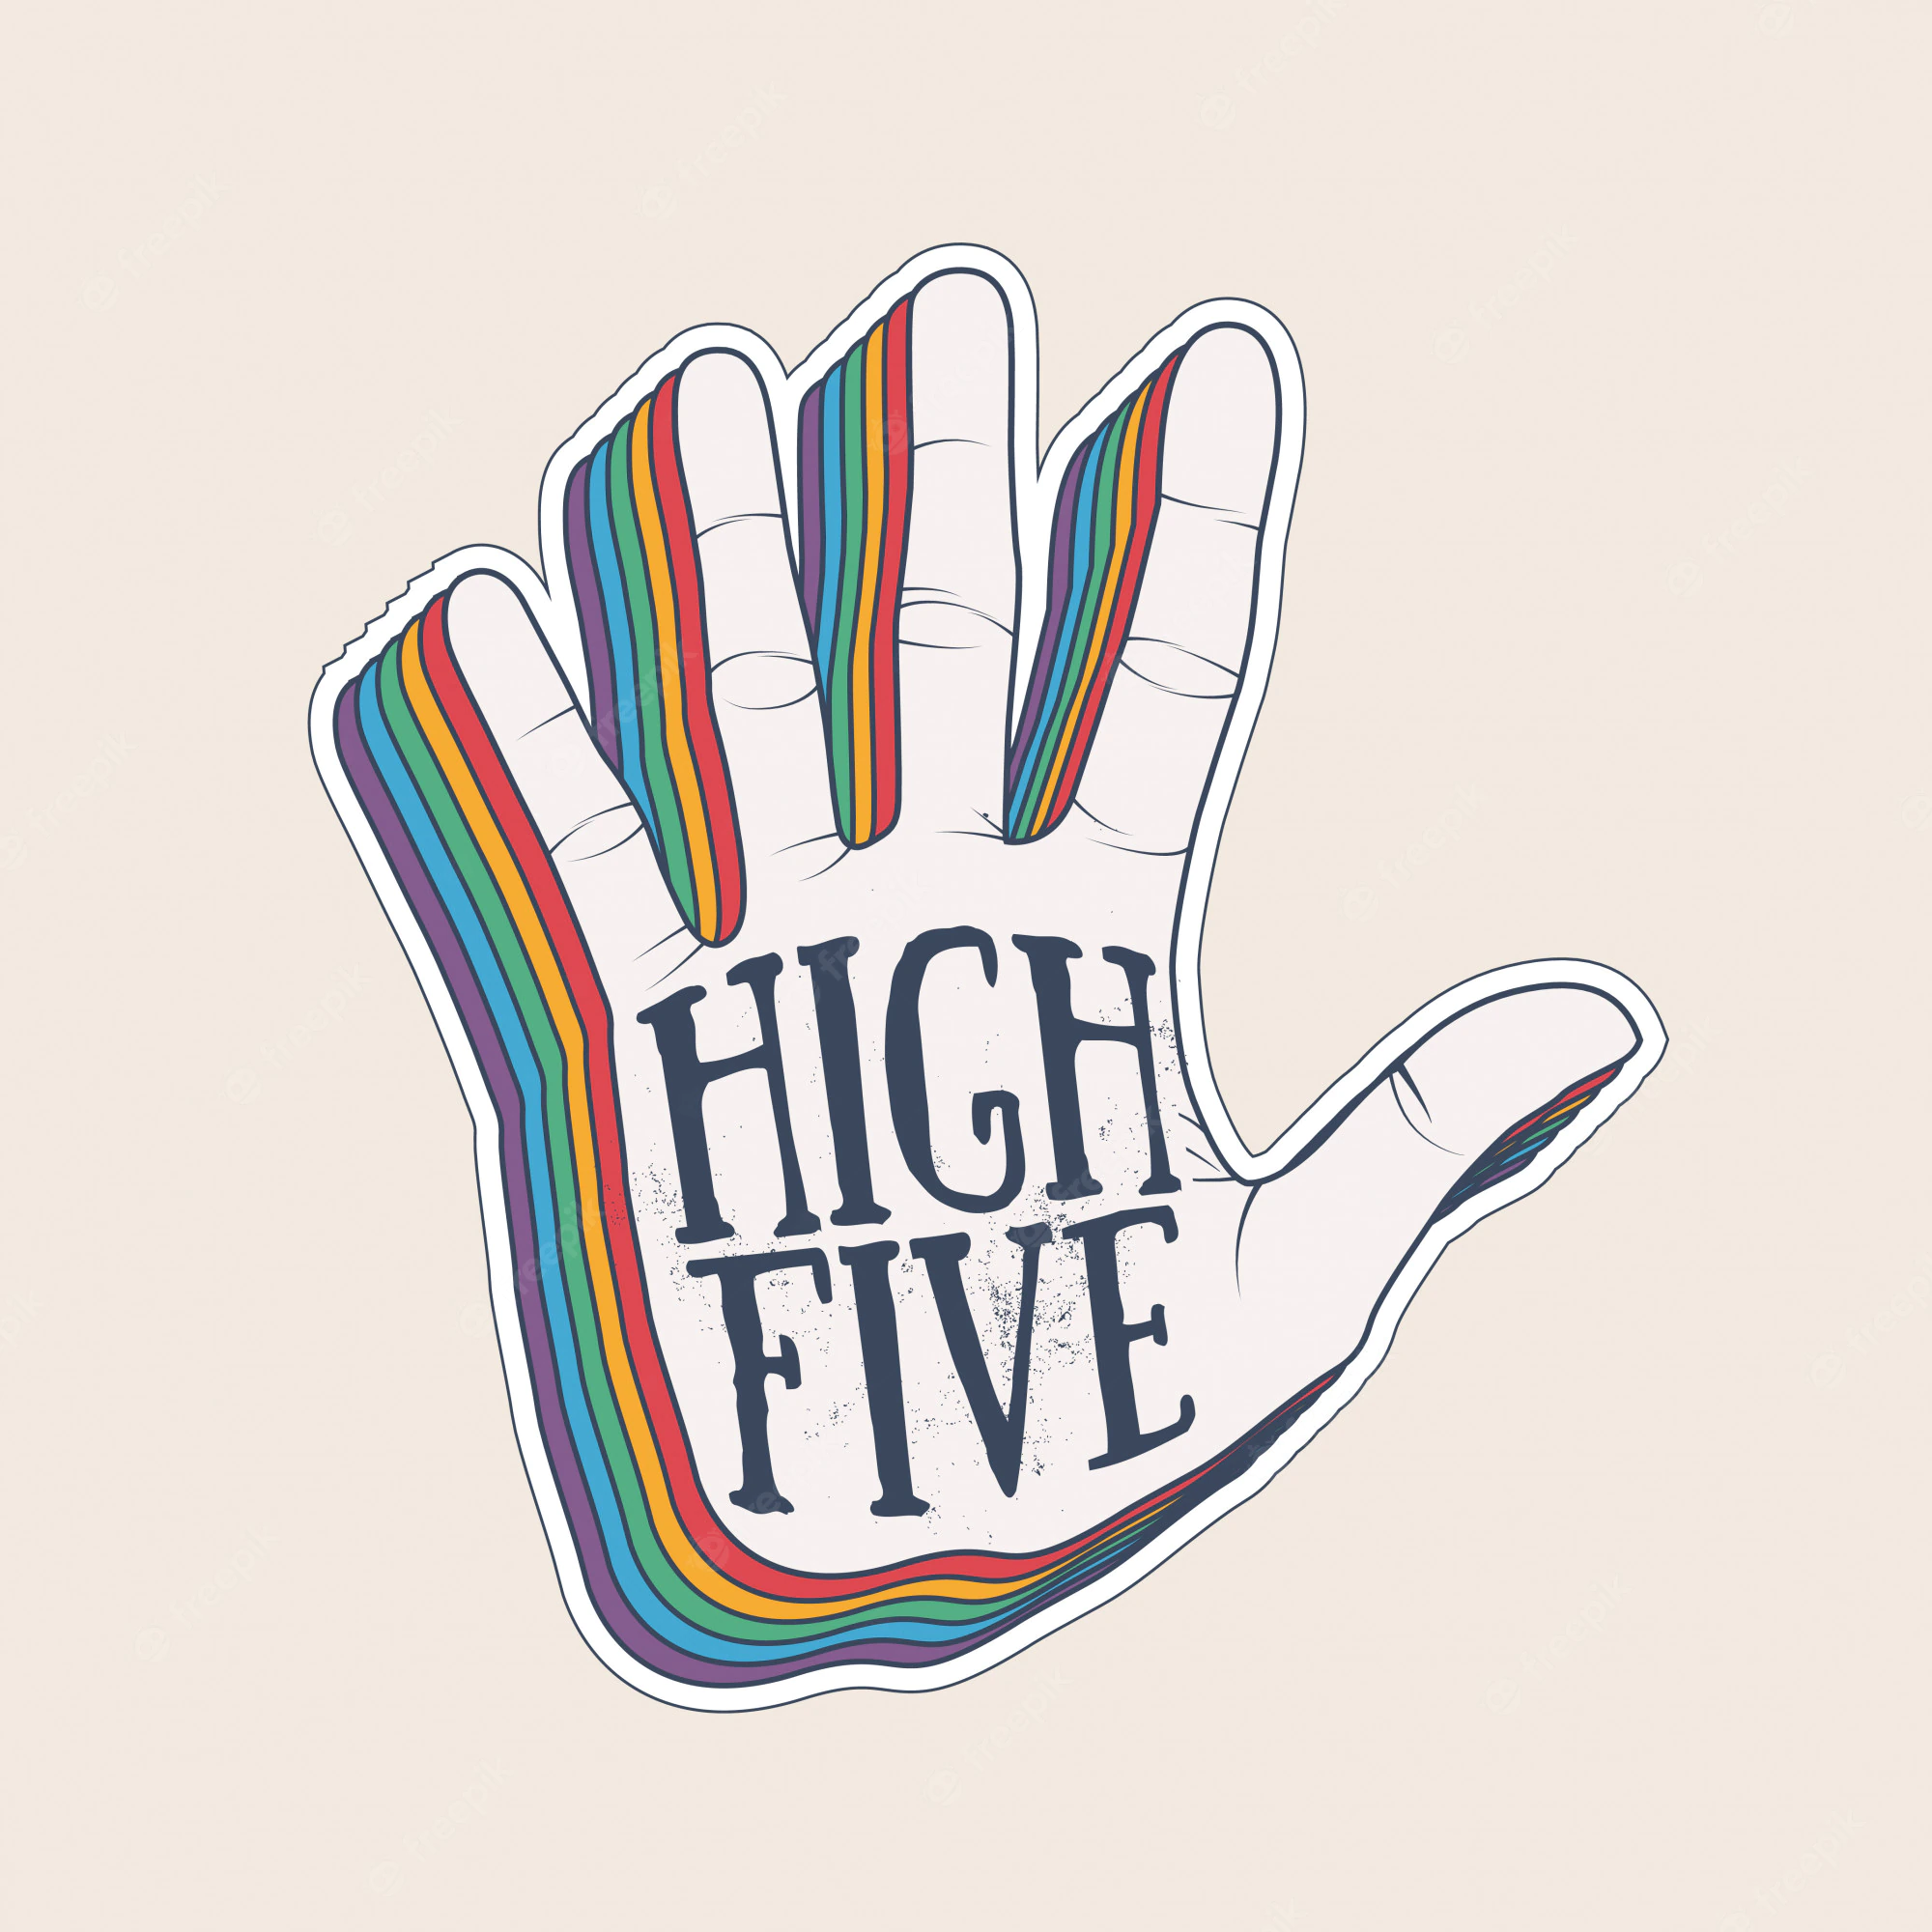 High Five!